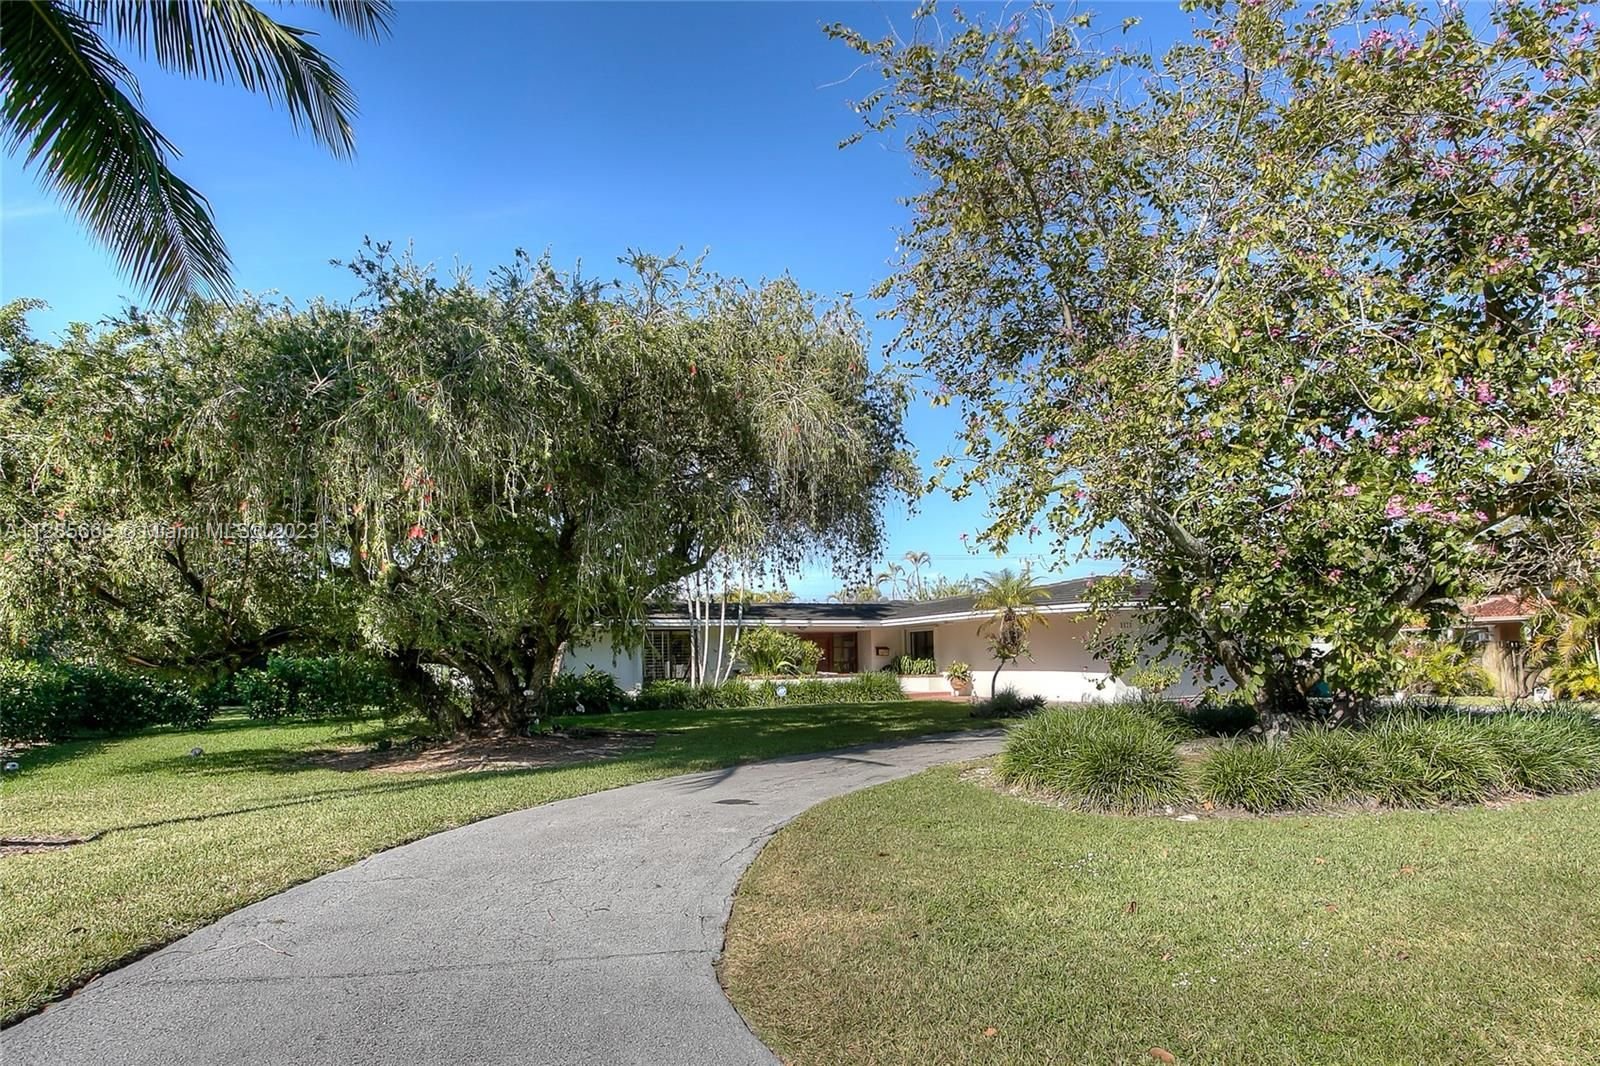 Real estate property located at 9670 96th Ct, Miami-Dade County, Miami, FL